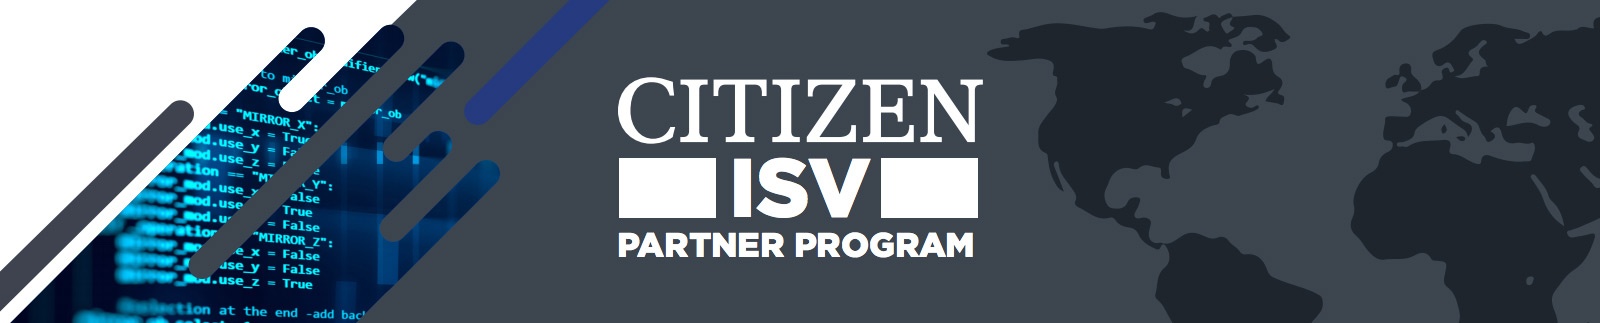 citizen-isv-microsite-header